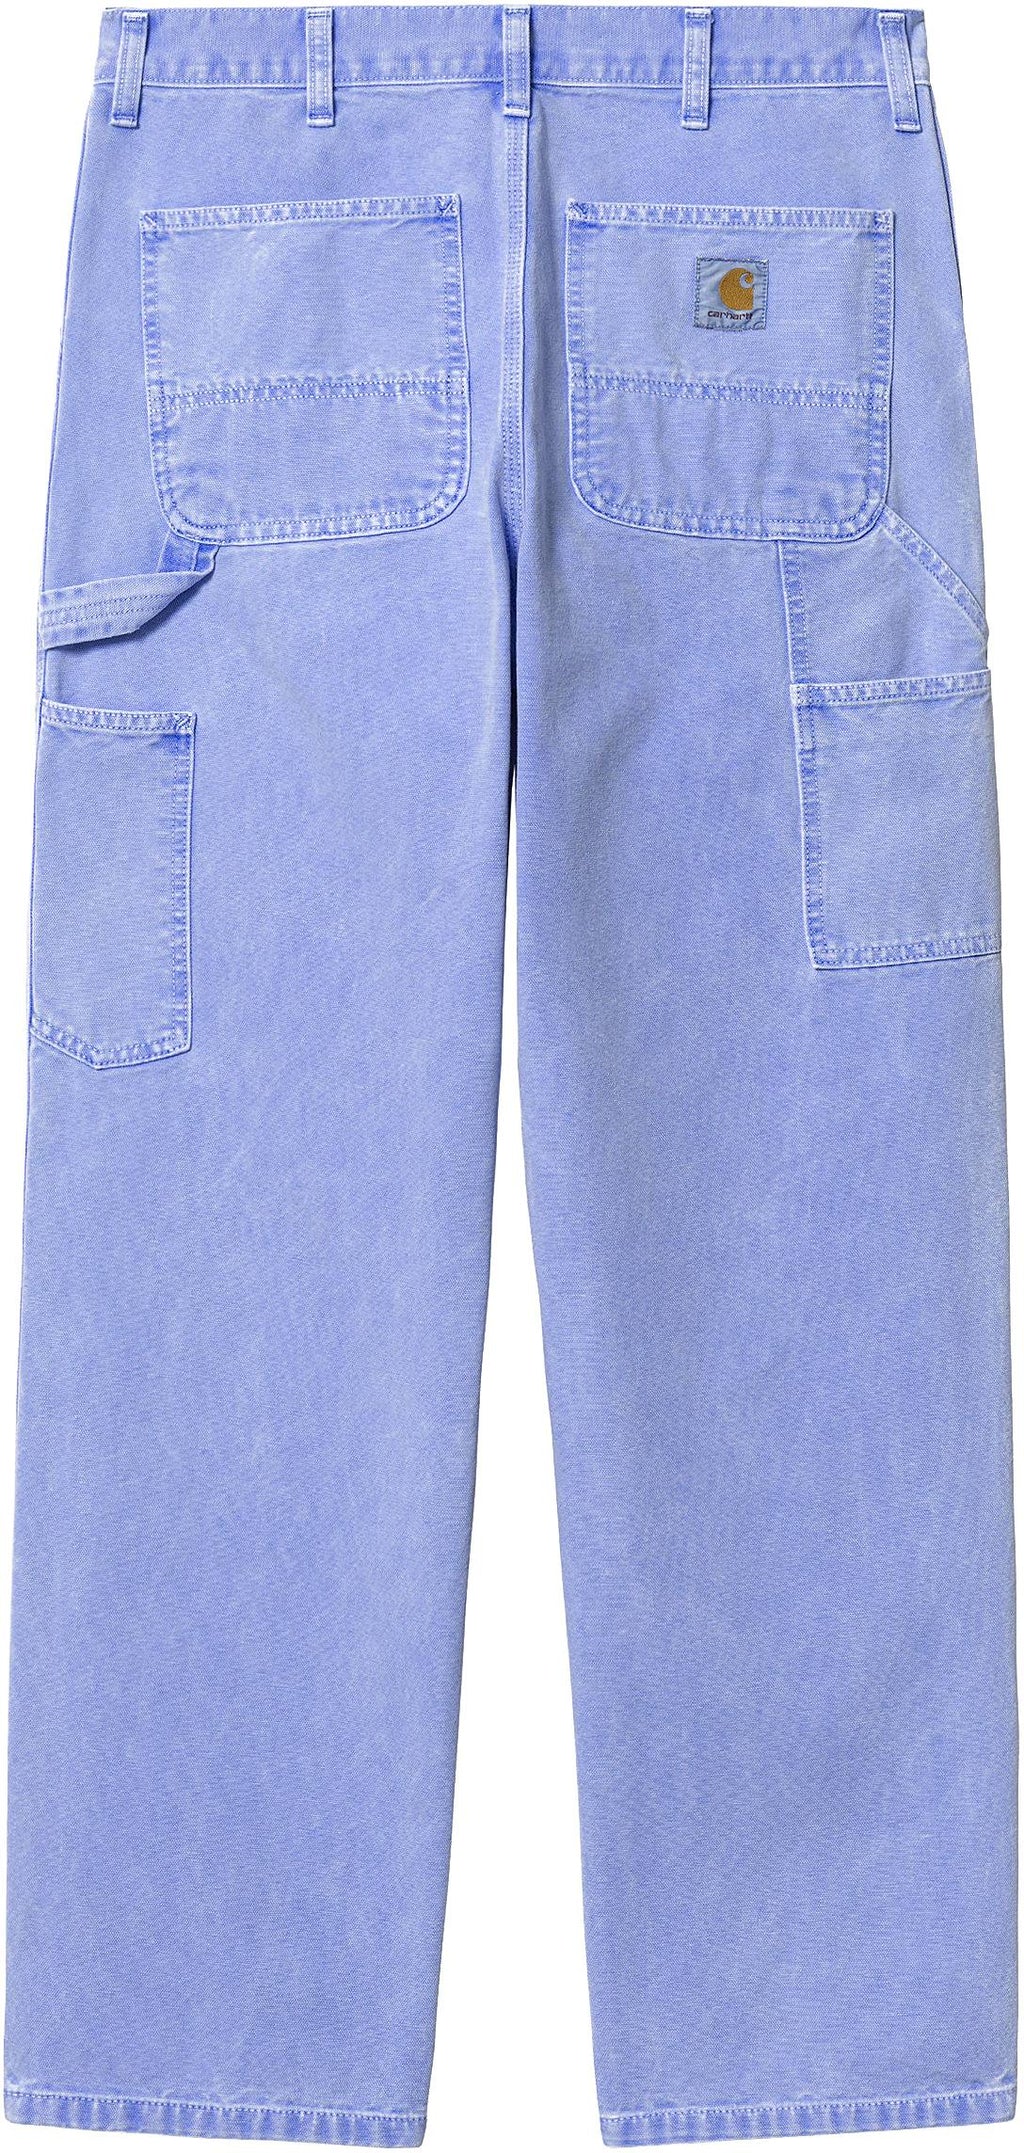  Carhartt Wip Pantaloni Jeans Single Knee Pant Icy Water Faded Uomo - 1